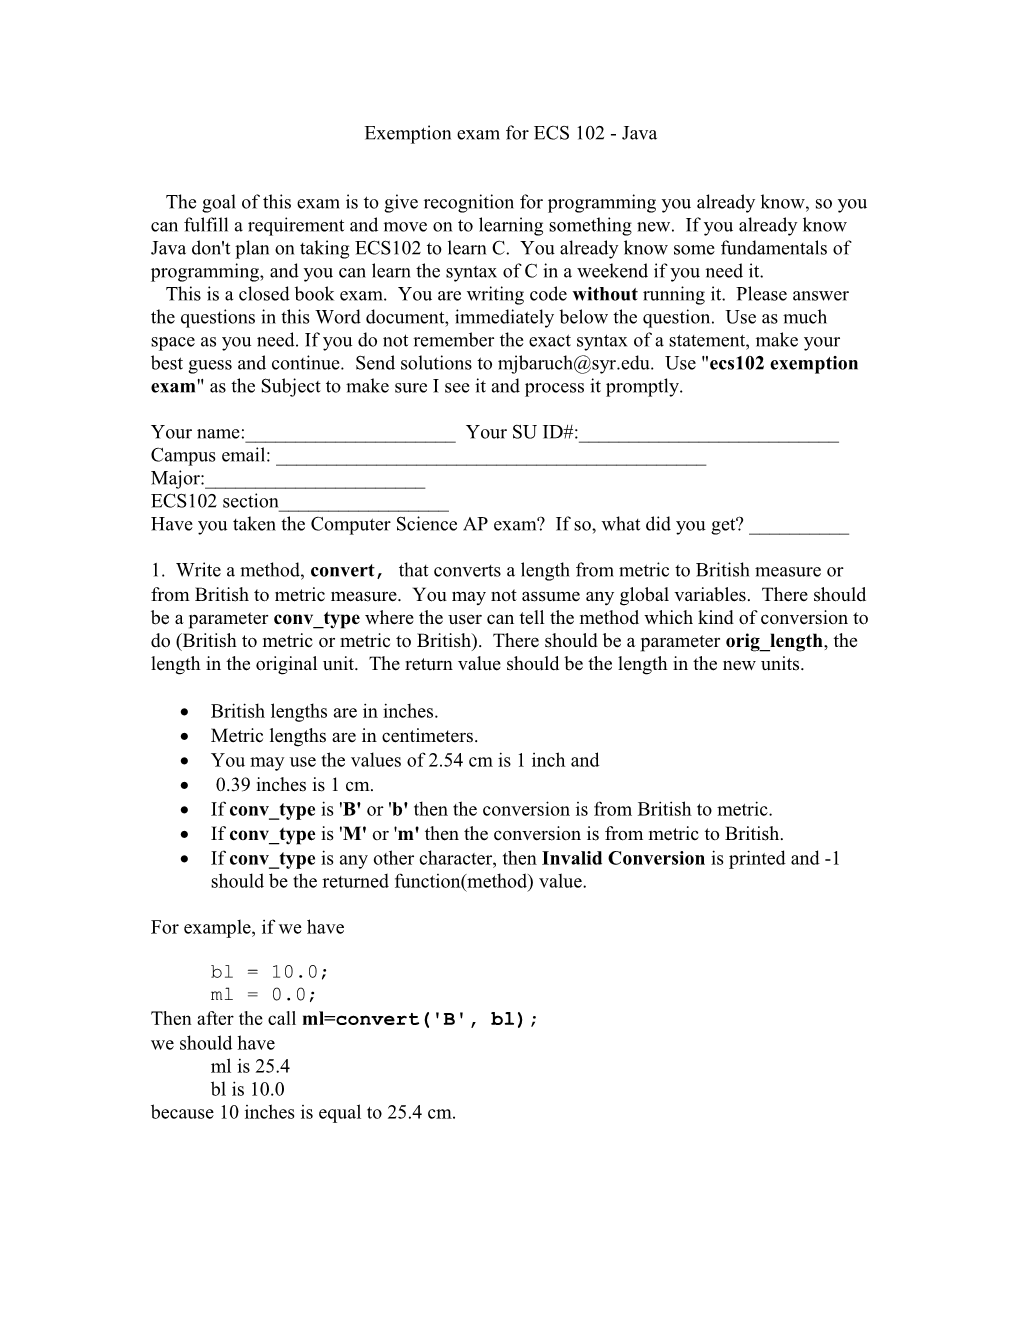 Exemption Exam for Ecs 102, Summer 2004